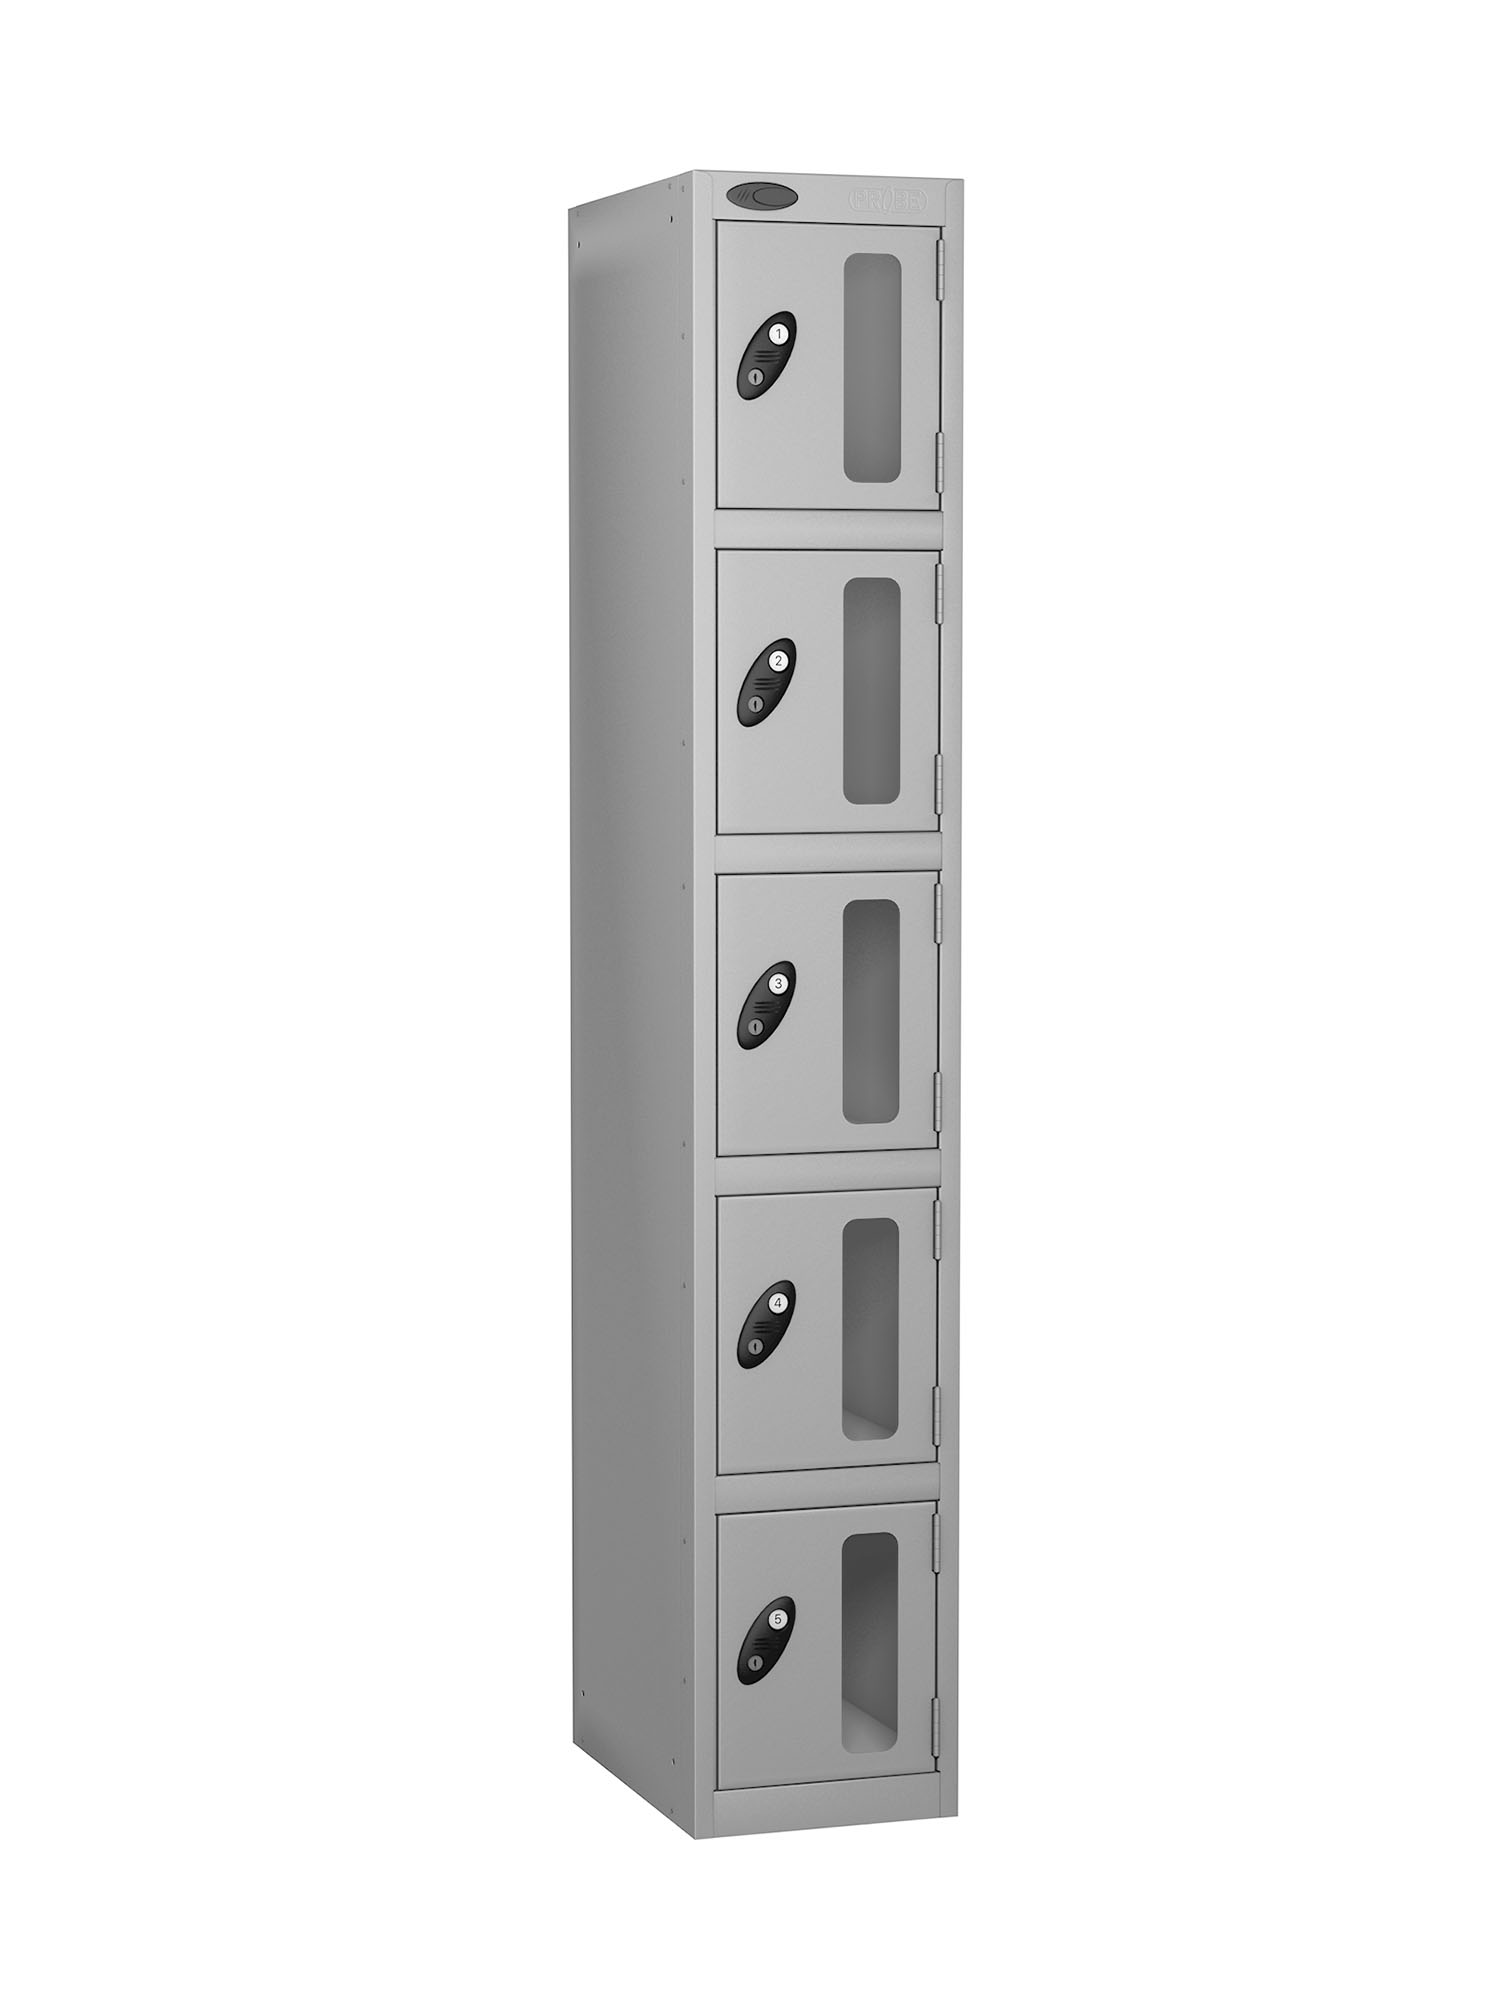 Probe 5 doors vision panel anti-stock theft locker silver